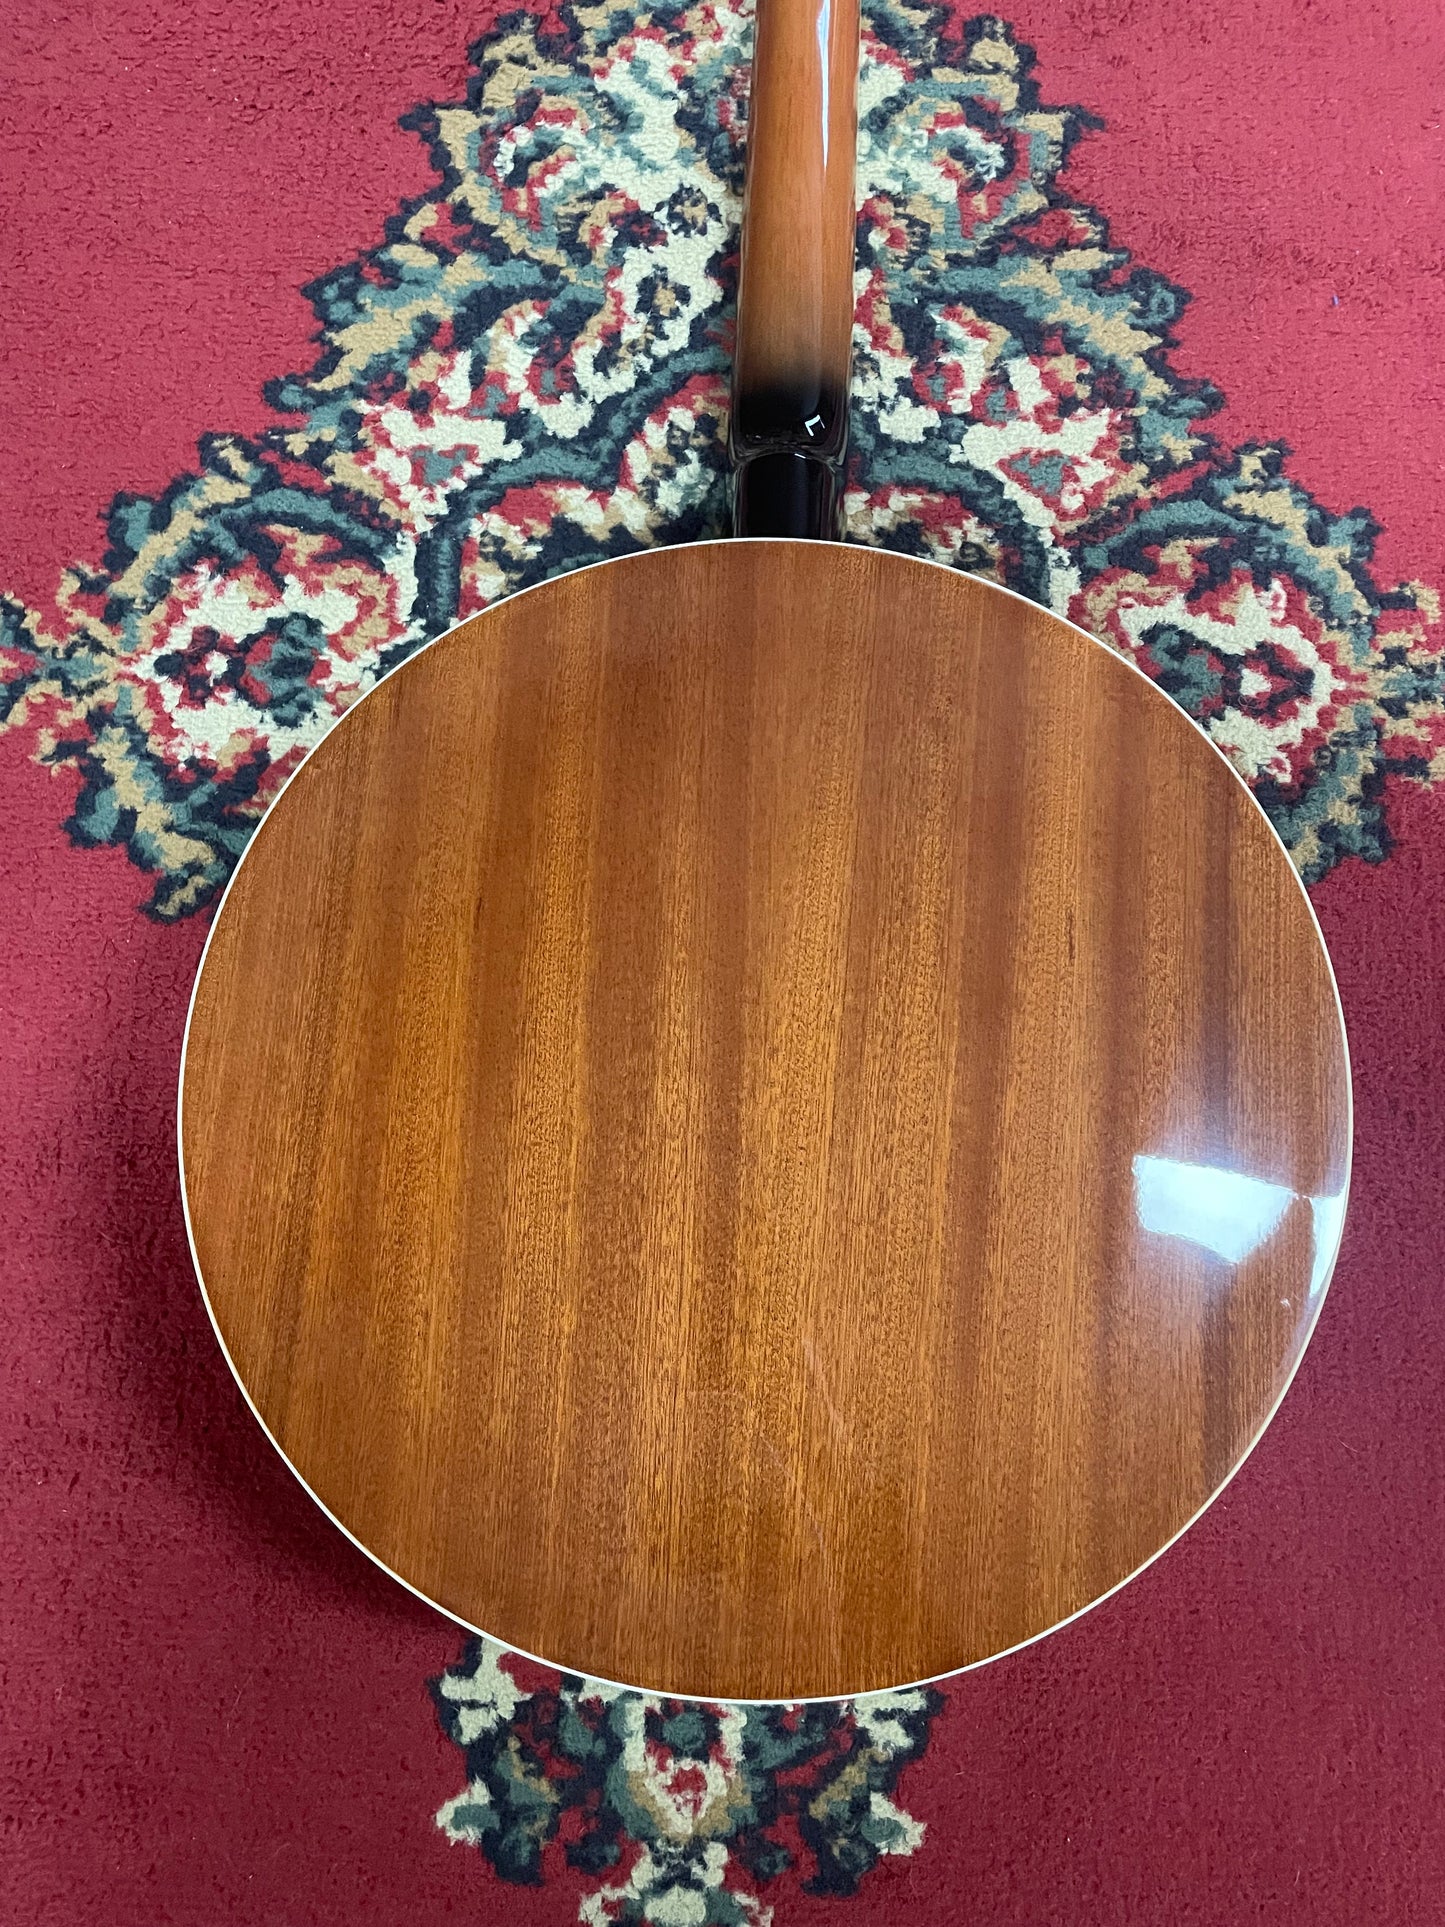 Bryden SBJ530 5 String Banjo